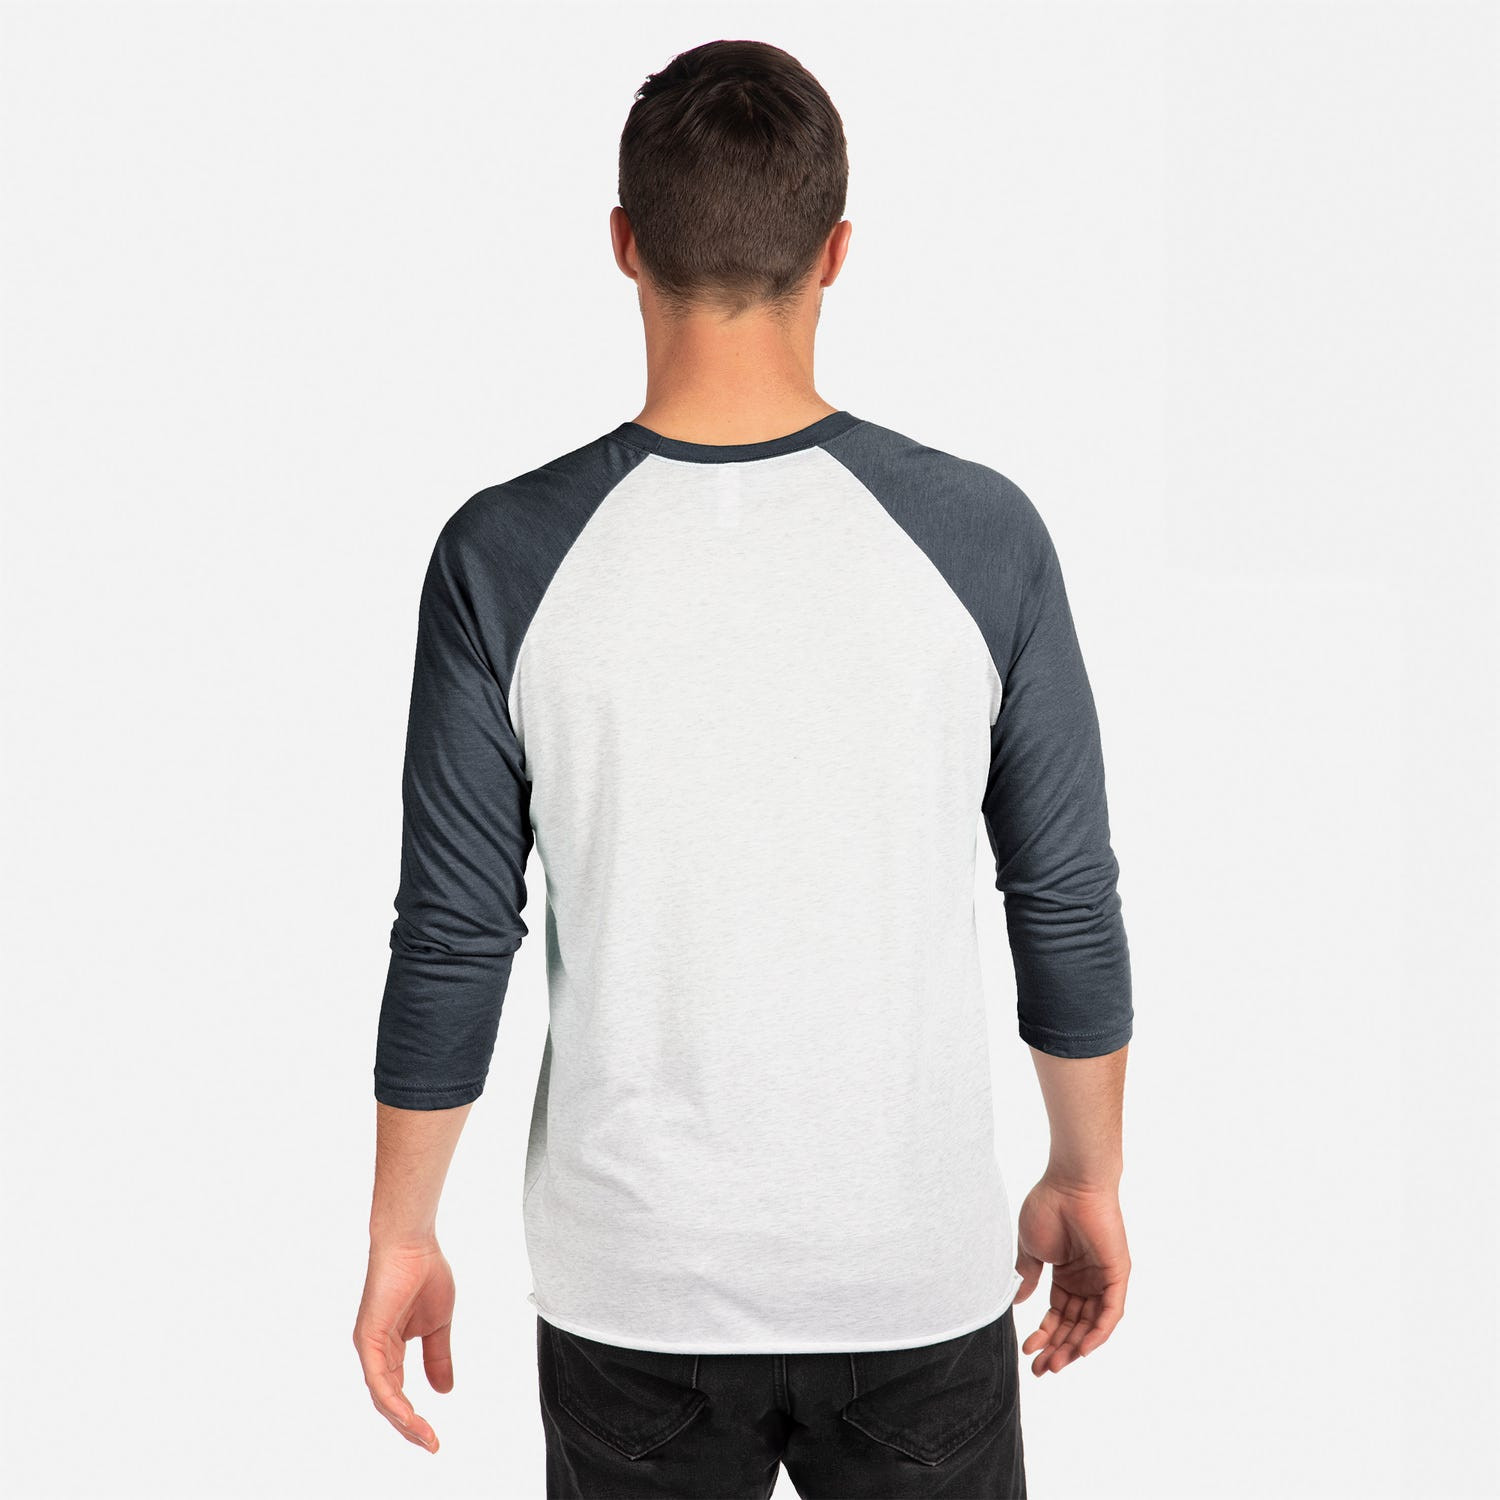 Unisex Poly-Cotton 3/4 Sleeve Raglan T-Shirt